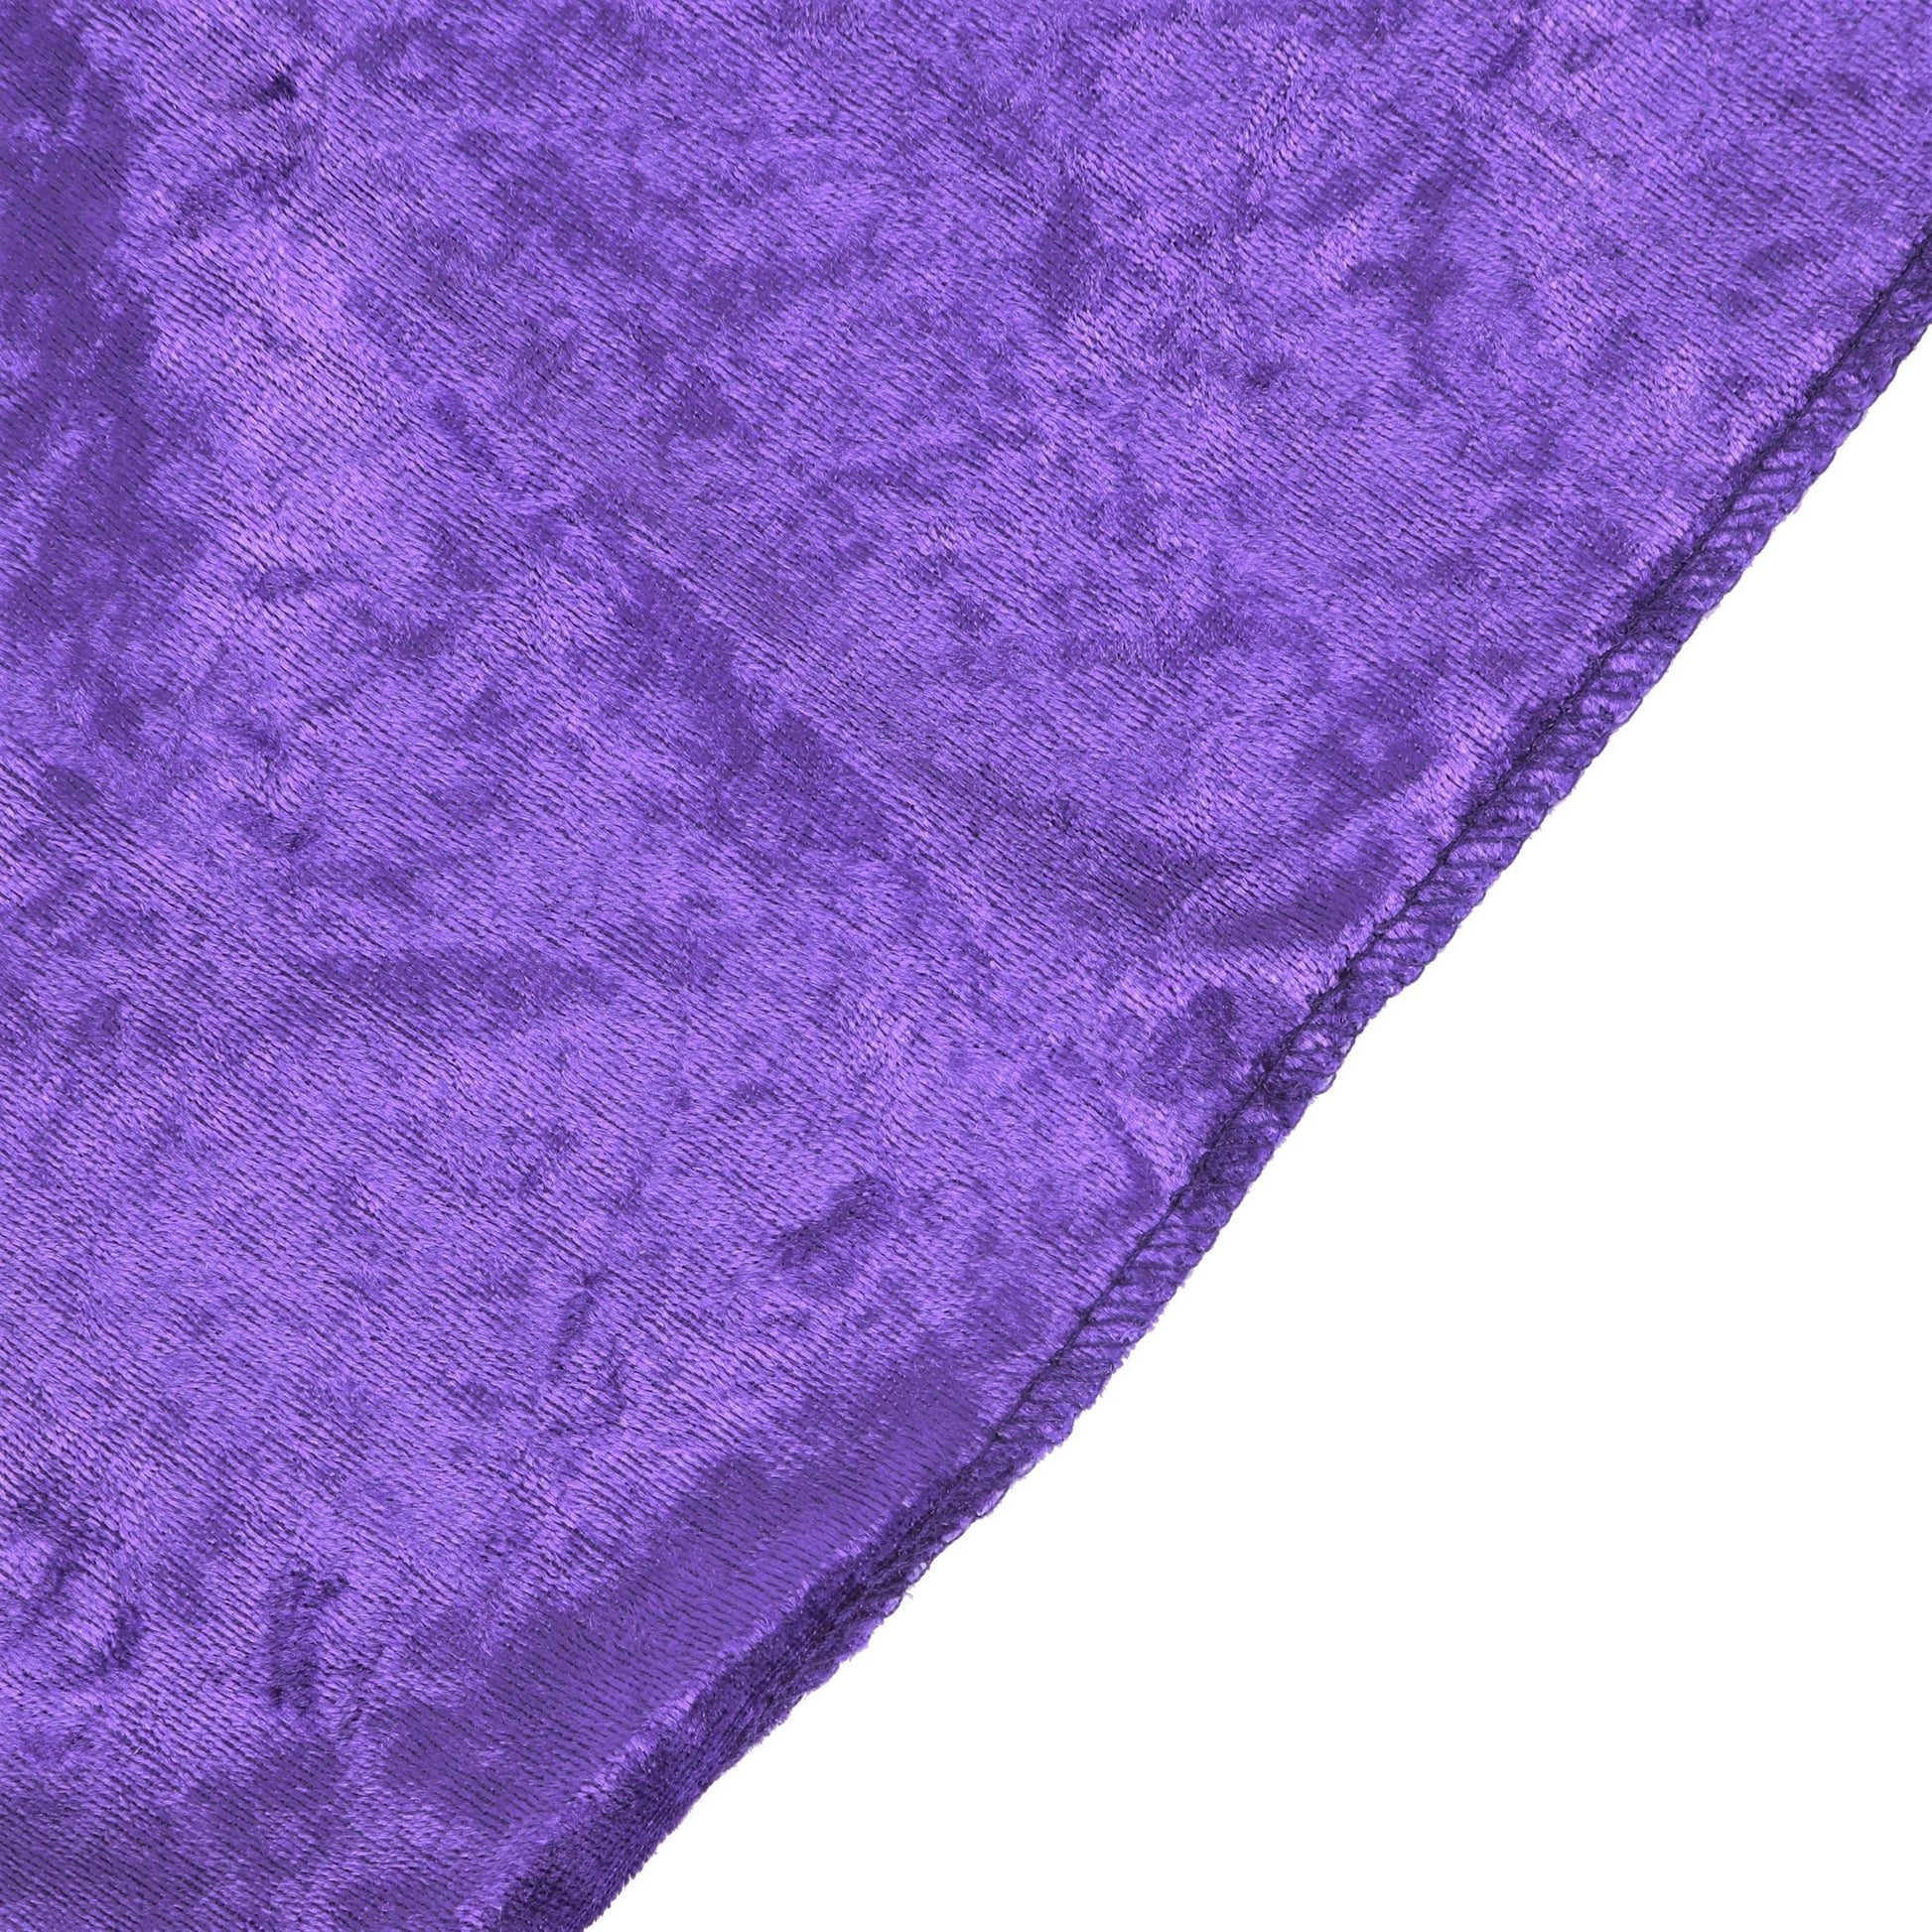 Velvet 8ft H x 52" W Drape/Backdrop Curtain Panel - Purple